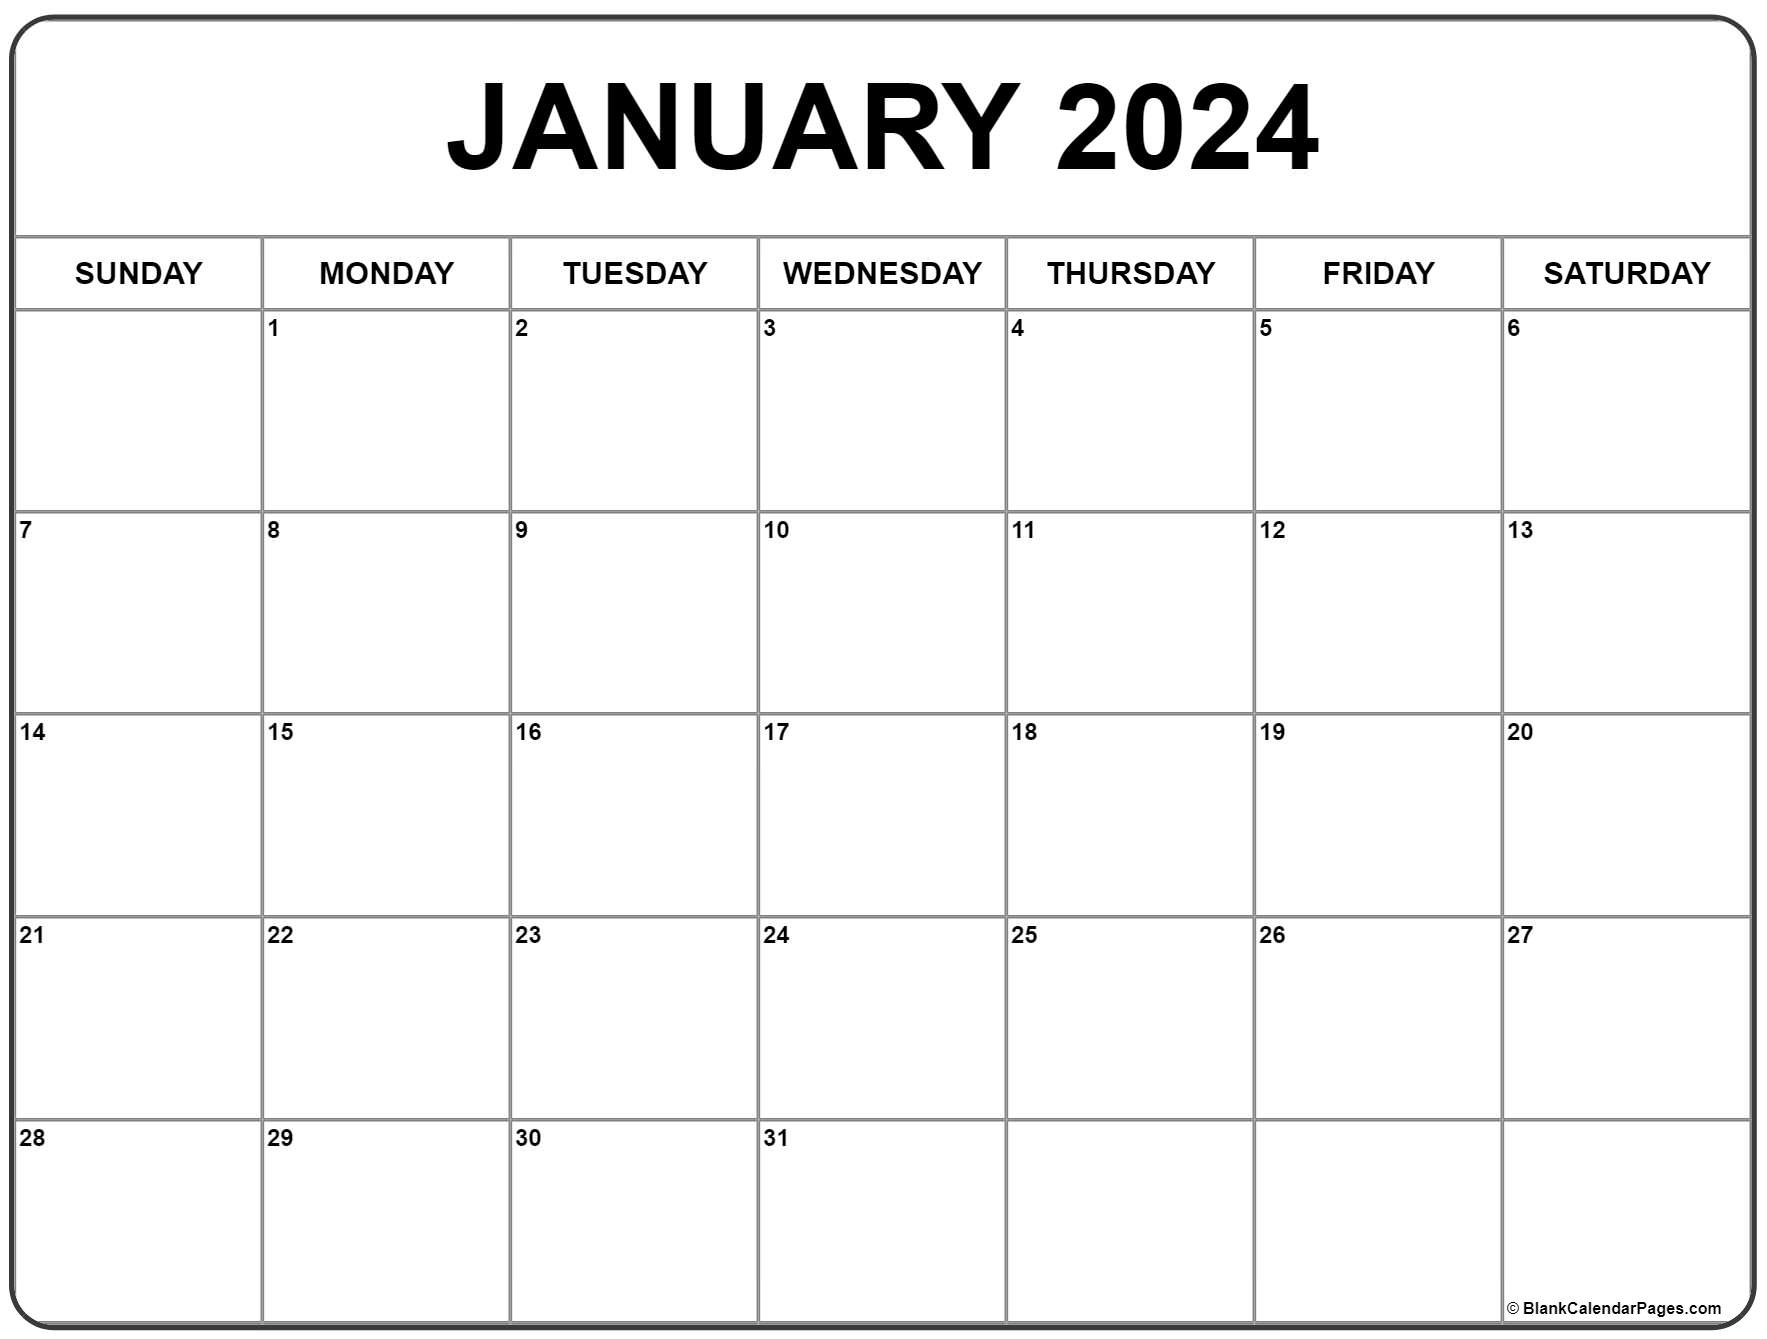 January 2024 Calendar | Free Printable Calendar for 2024 Calendar Months Printable